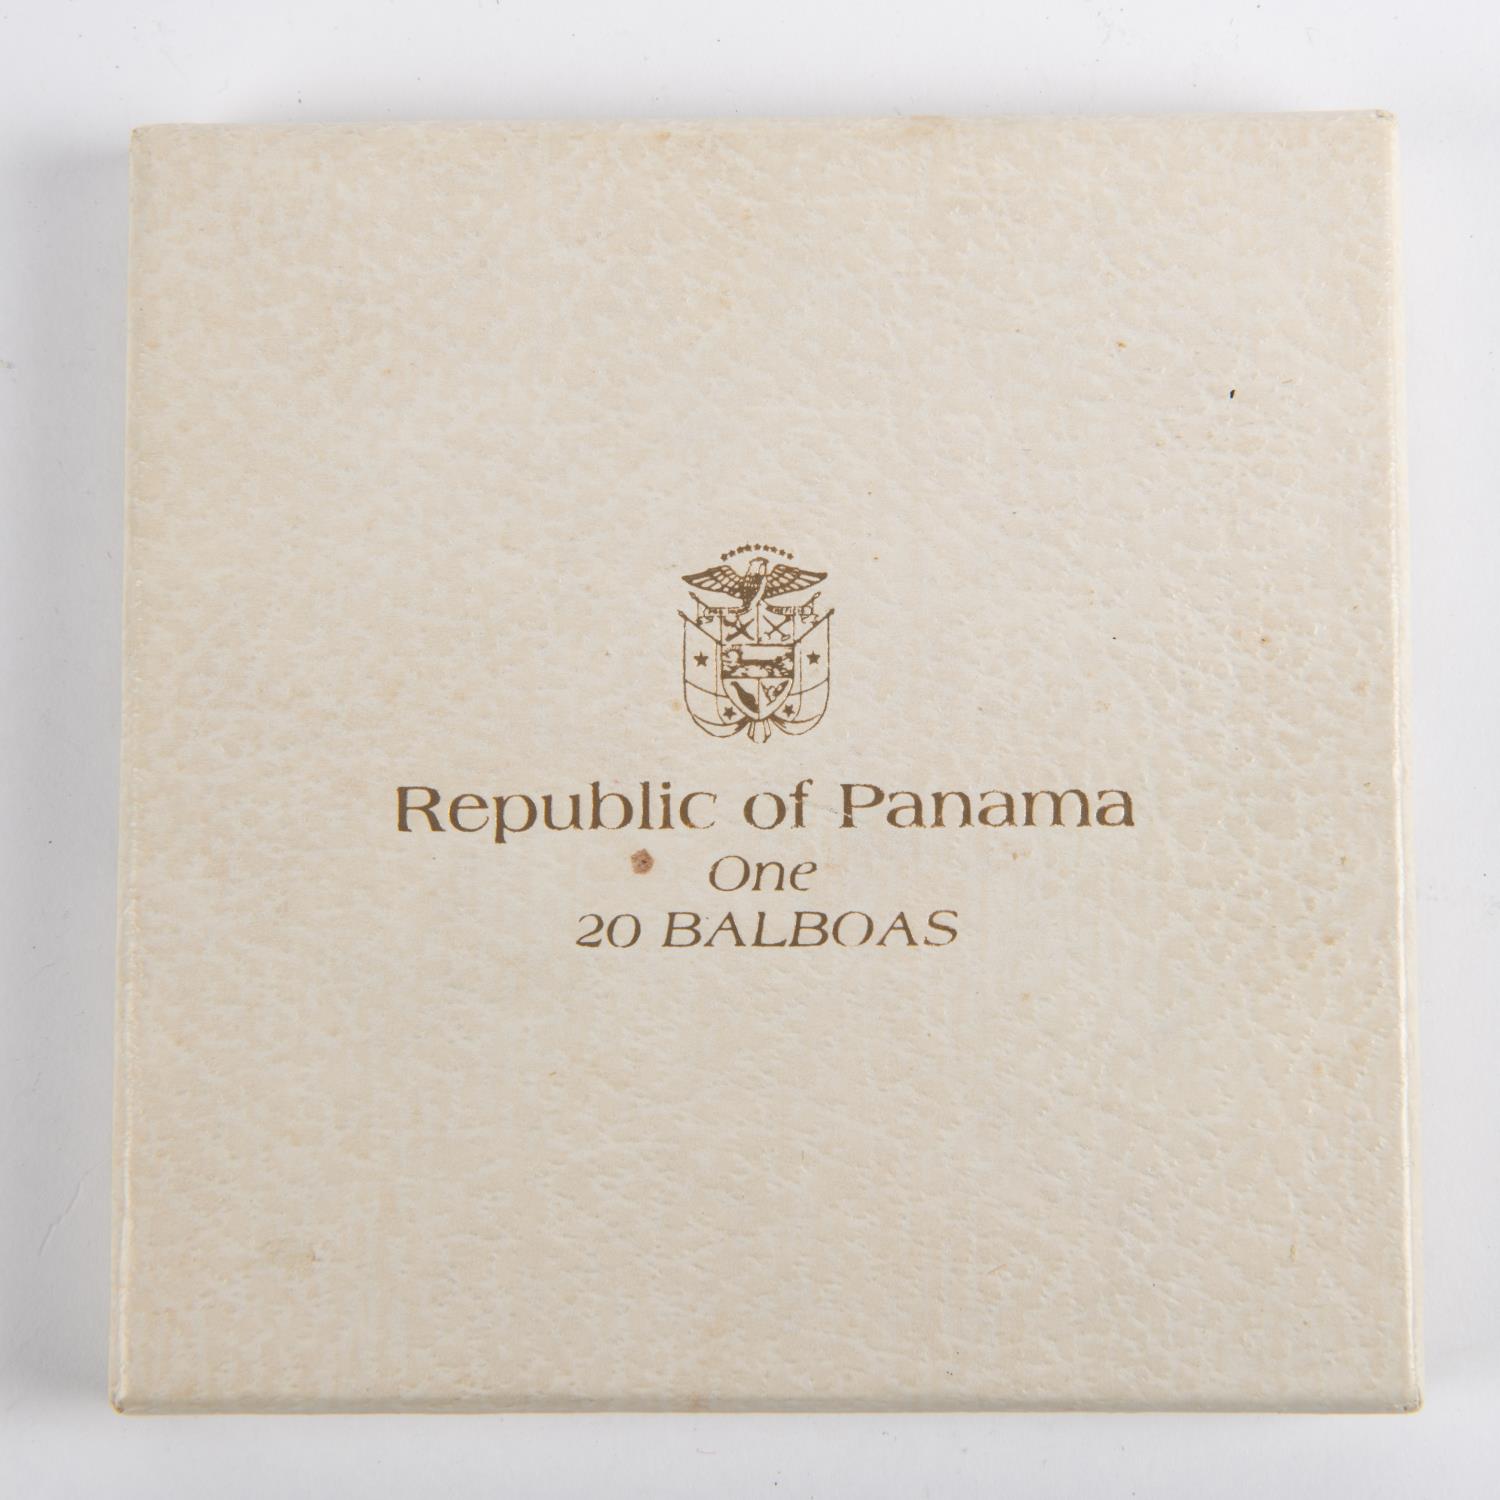 Republic of Panama AR 20 Balboas 1974 Proof coin, Unc in original box. Seychelles AR 25 Rupees for - Image 3 of 3